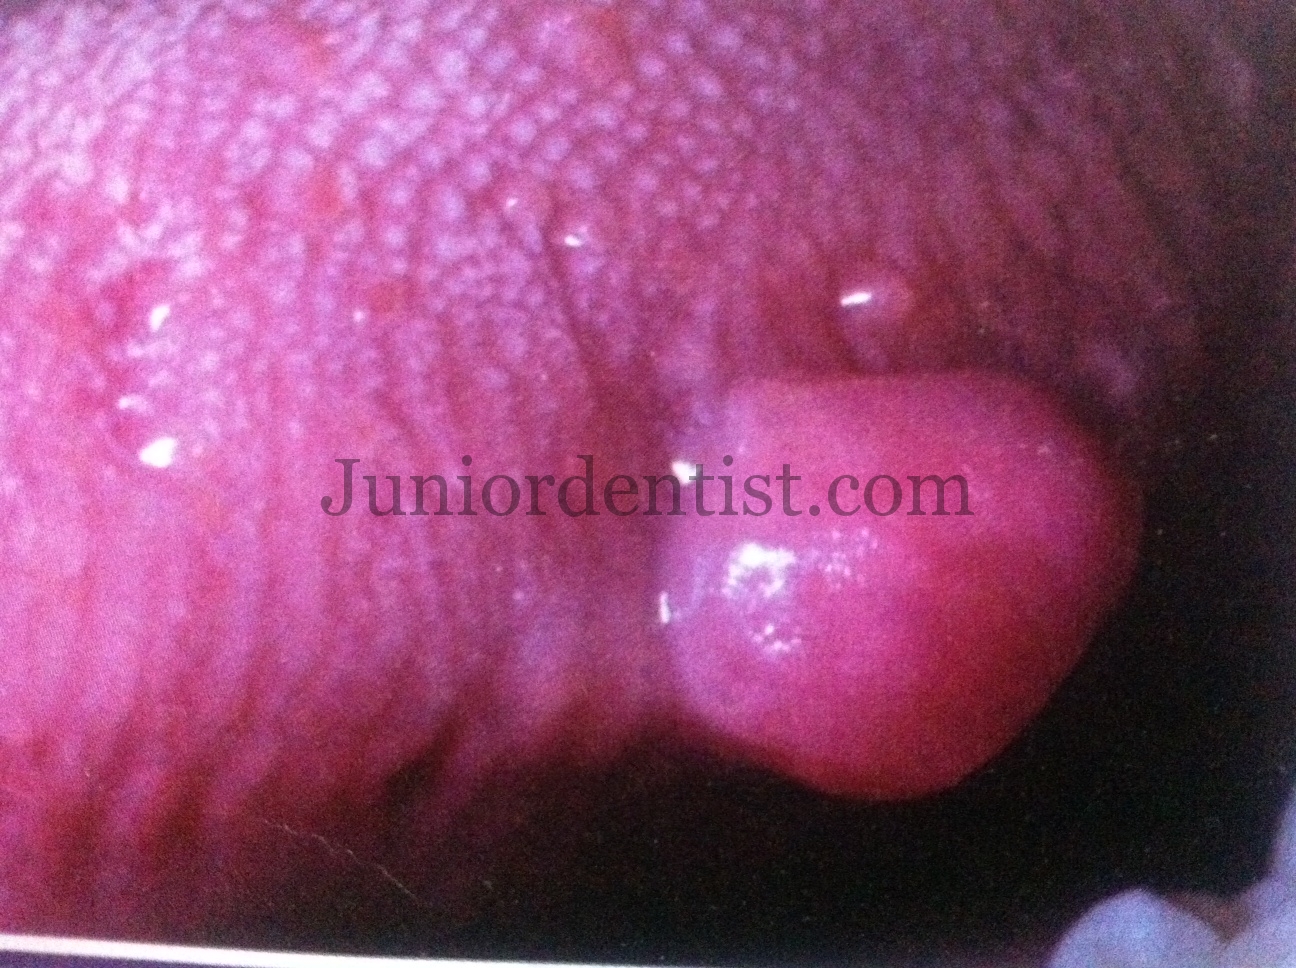 Images in…: Traumatic fibroma of tongue - ncbi.nlm.nih.gov